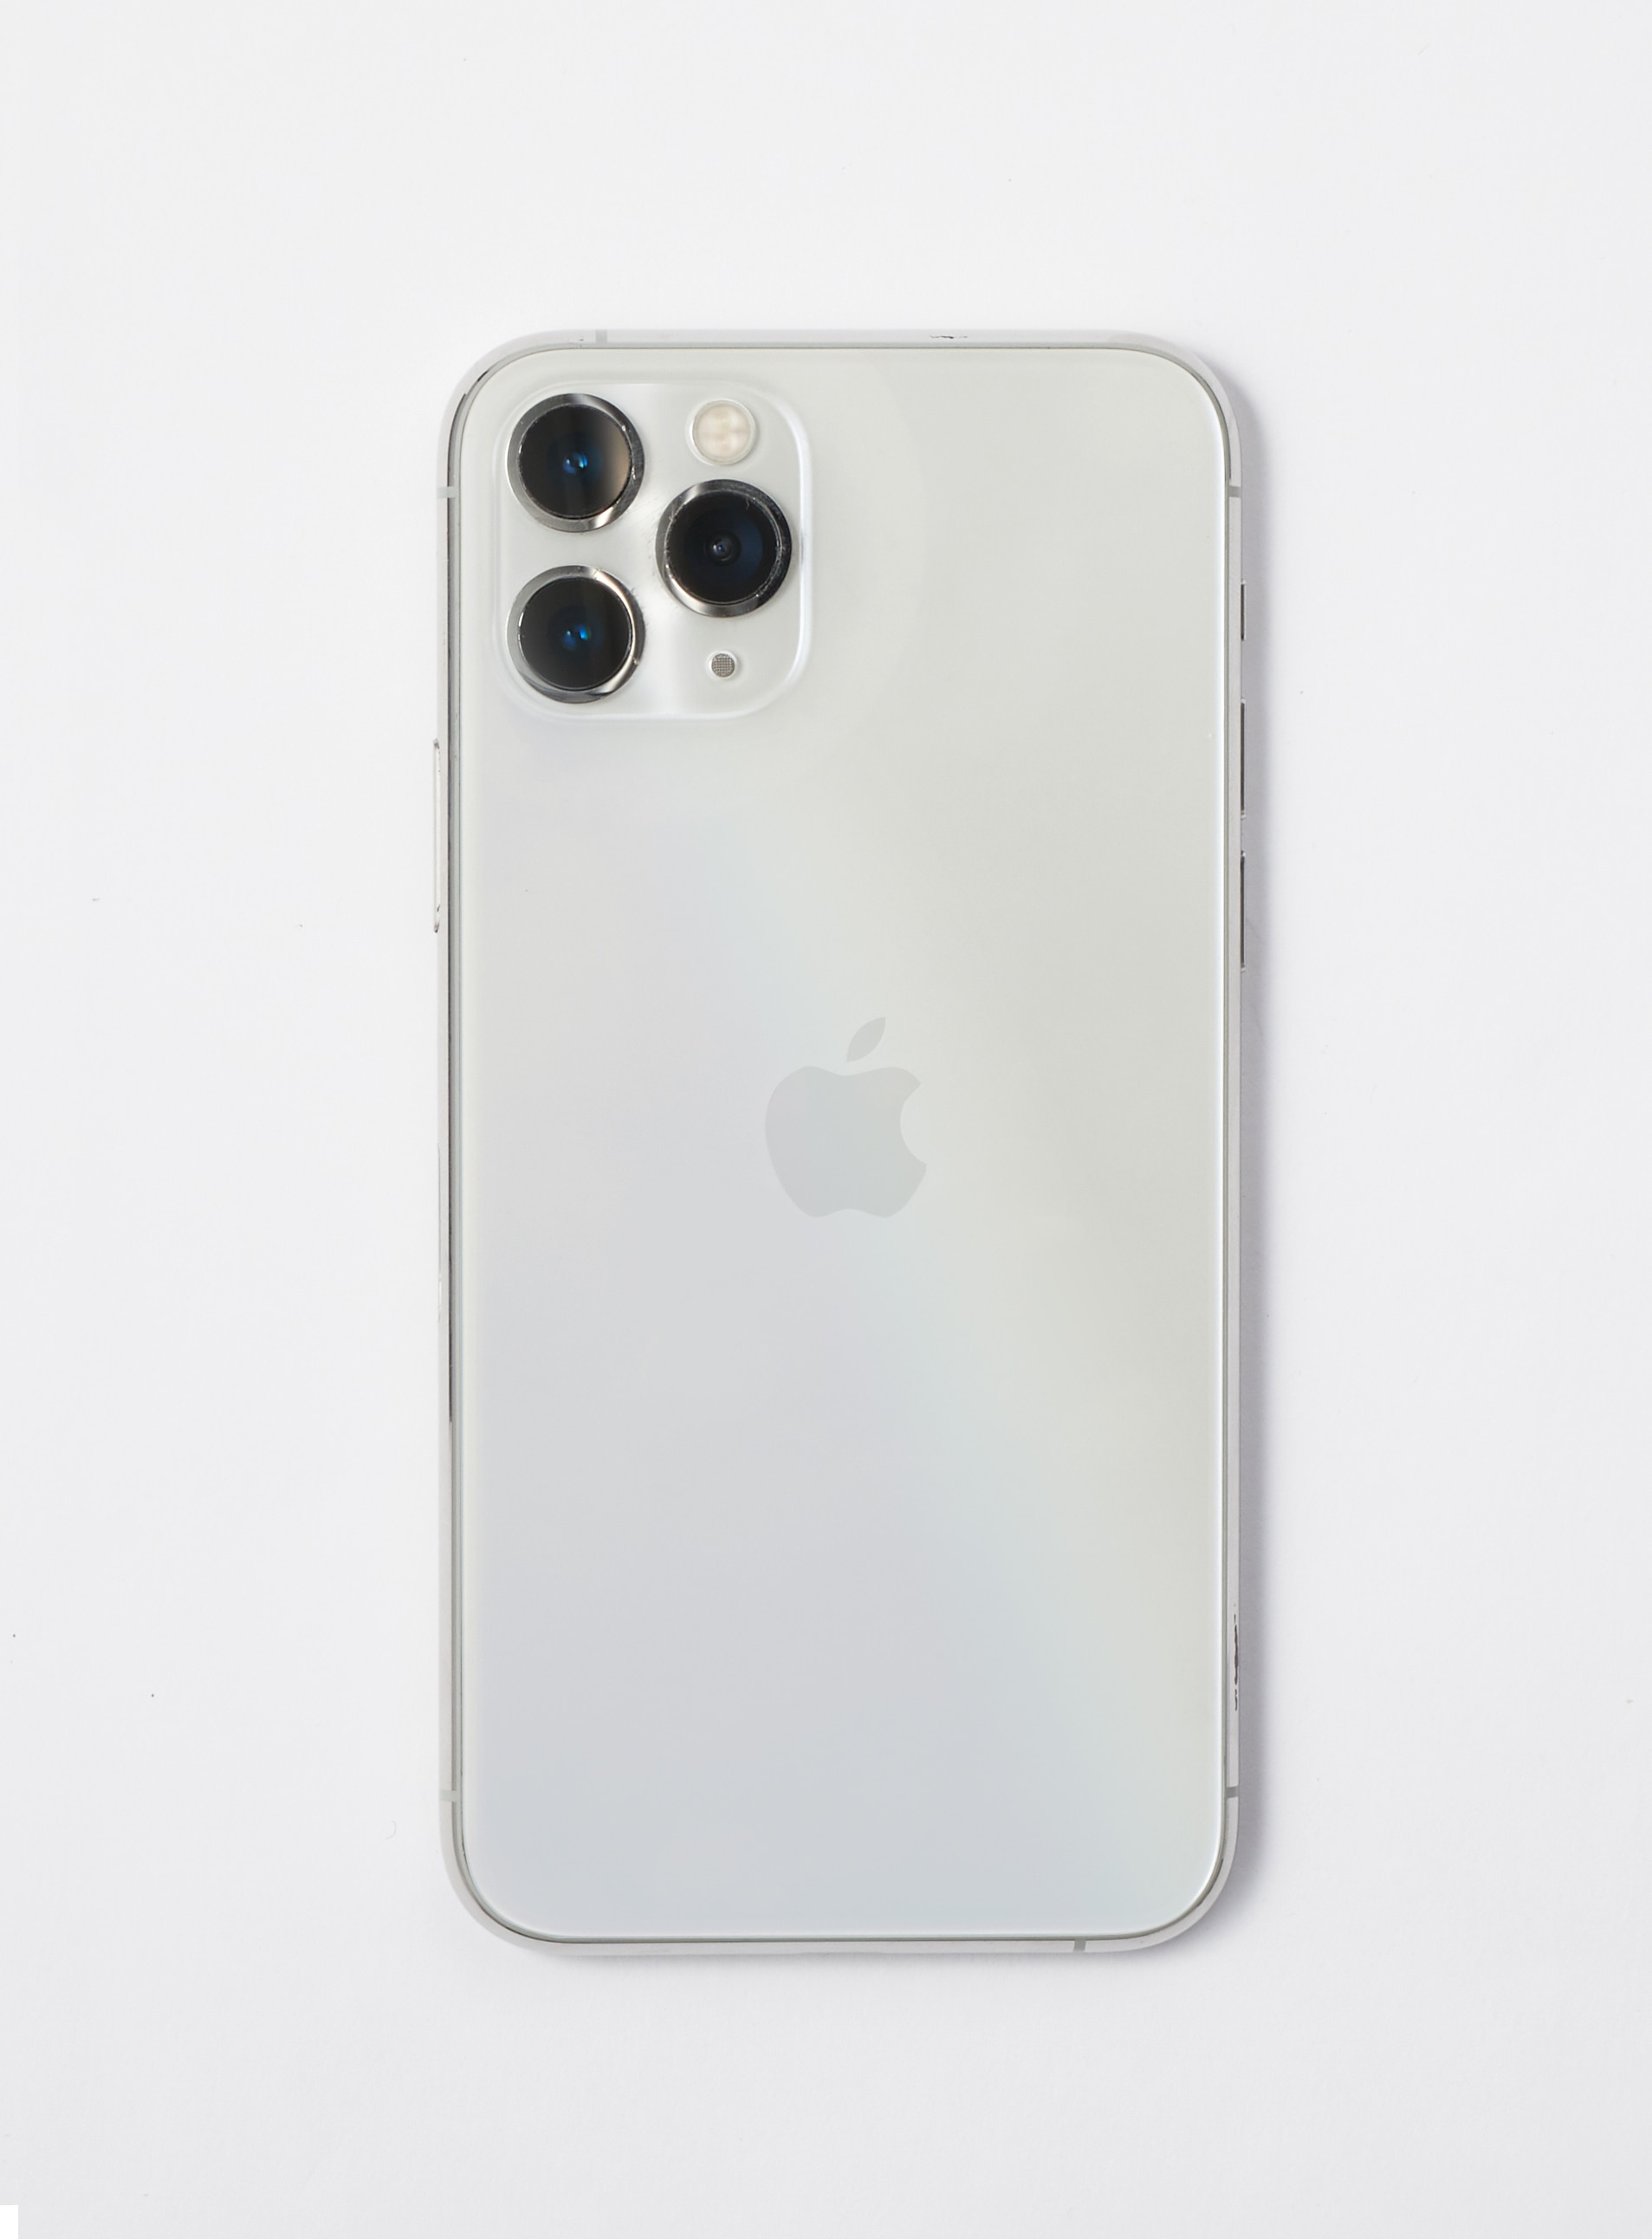 Electronics - Phones - Smartphones - Apple iPhone 11 Pro 256GB 